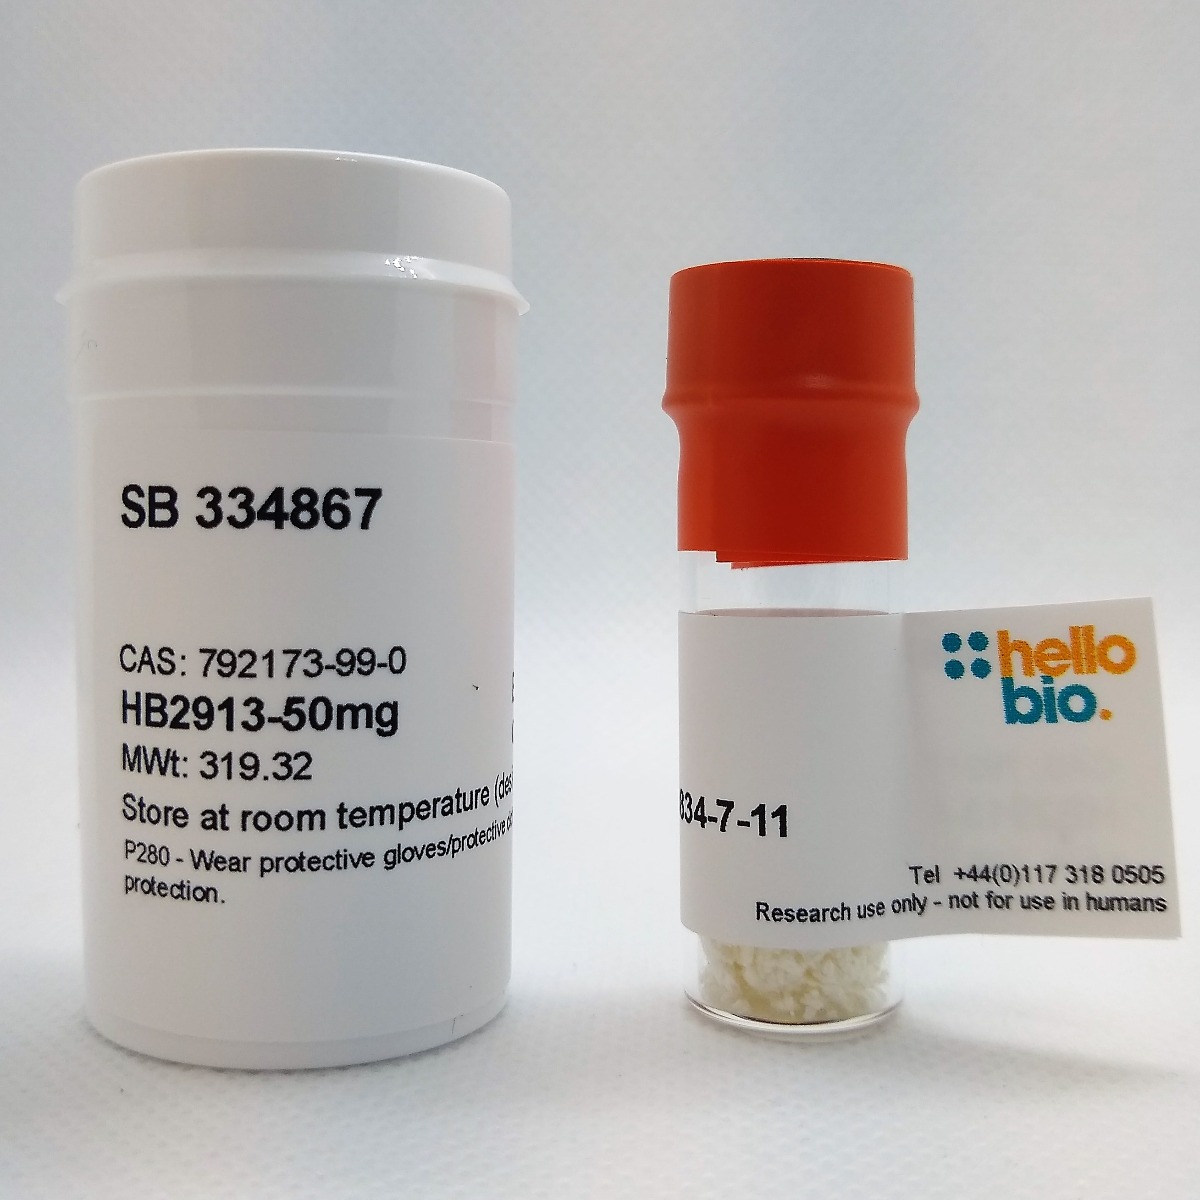 SB 334867 product vial image | Hello Bio